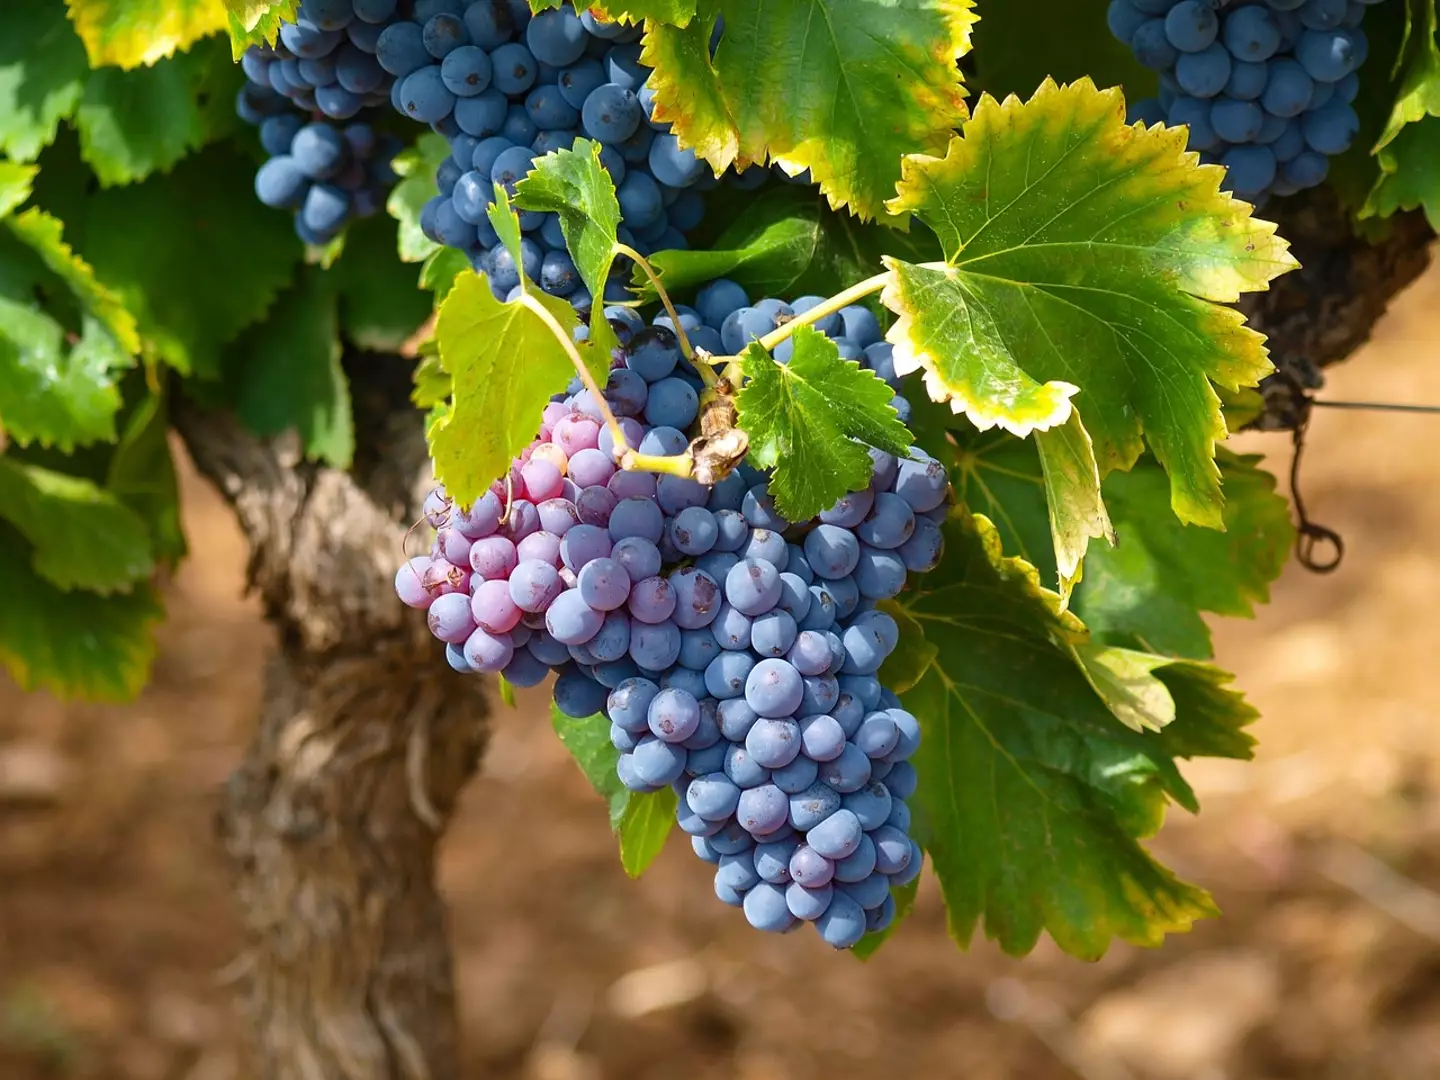 The origin of wine has been explored in a recent study.